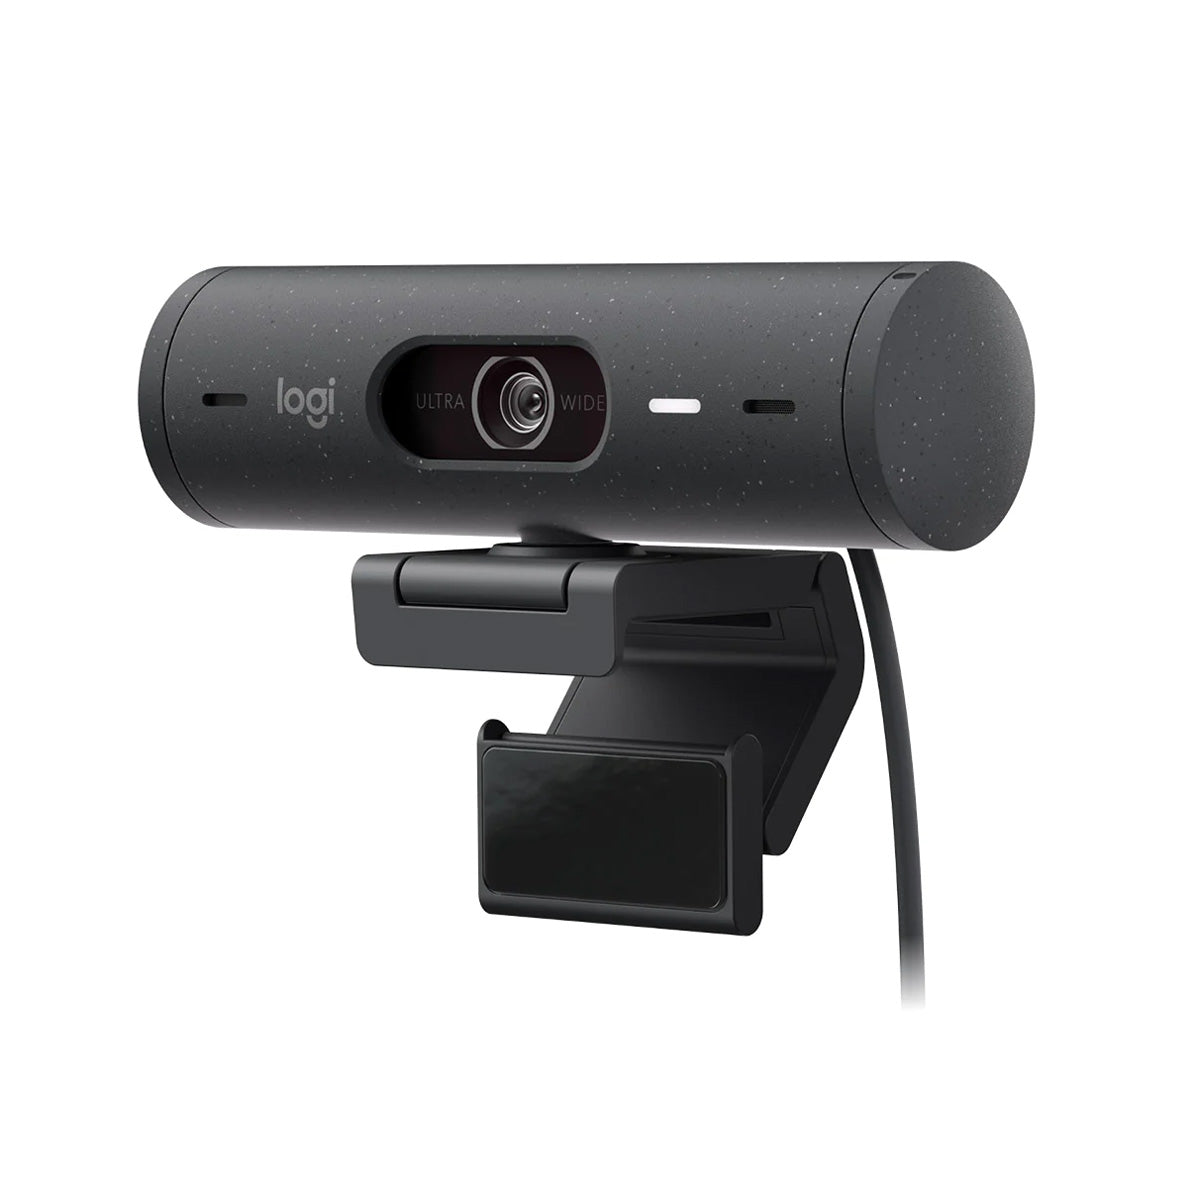 Buy Logitech C922 Pro Stream Webcam at Connection Public Sector